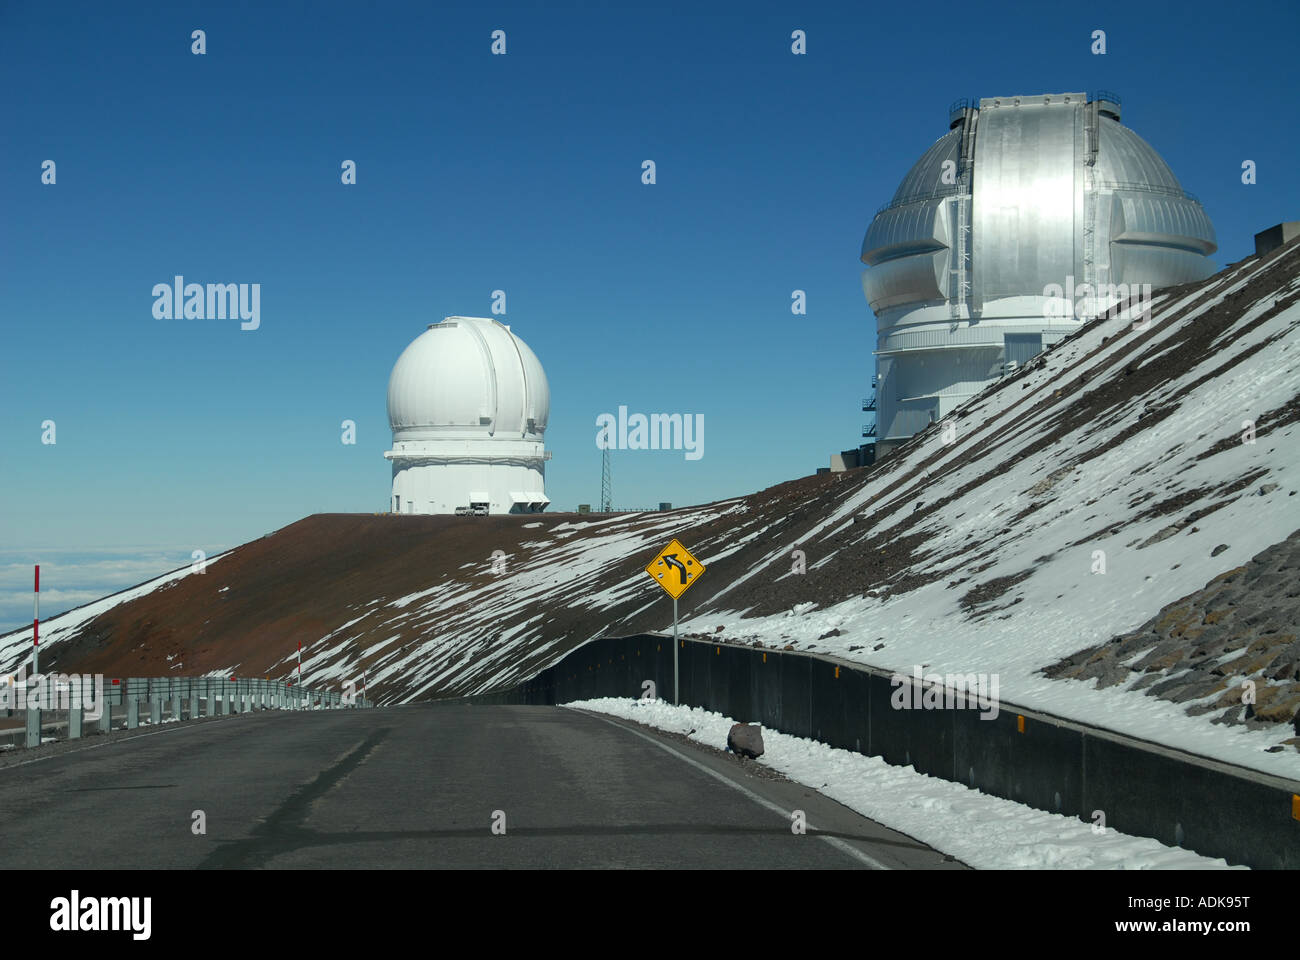 Canada France Hawaii Telescope and Gemini North Telescope on Mauna Kea  Stock Photo - Alamy